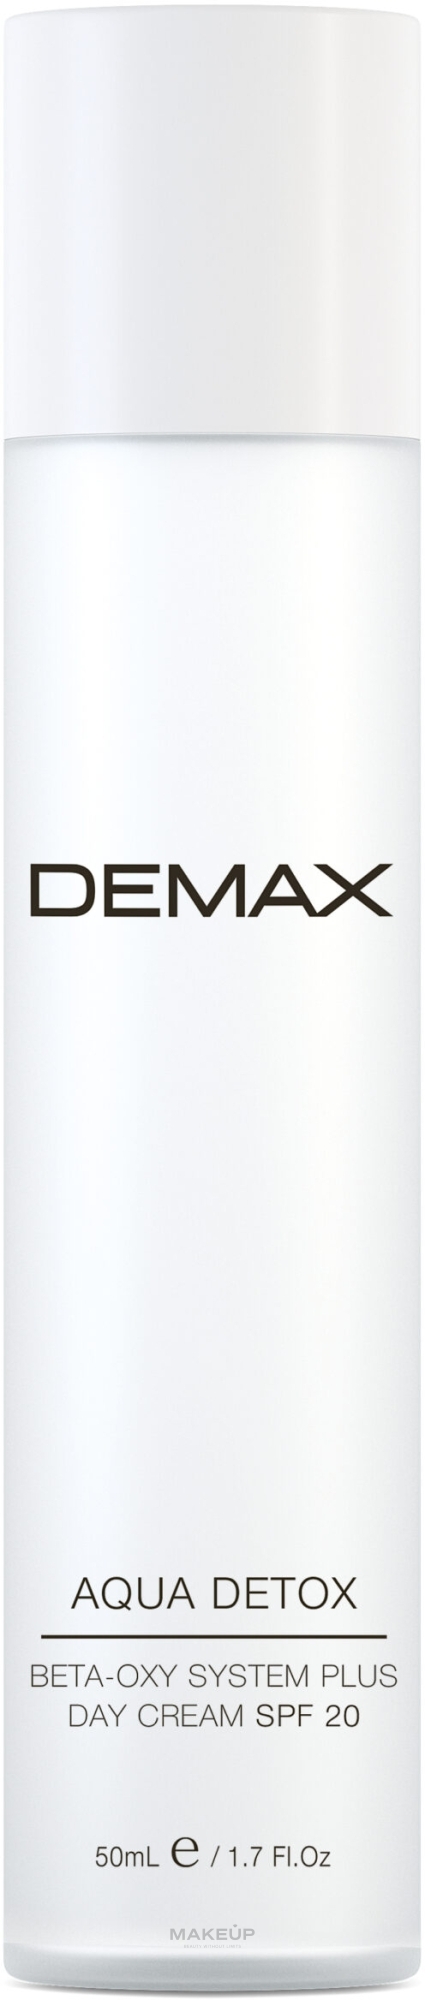 Дневной крем «Аква детокс» - Demax Aqua Detox Cream SPF 20 — фото 50ml